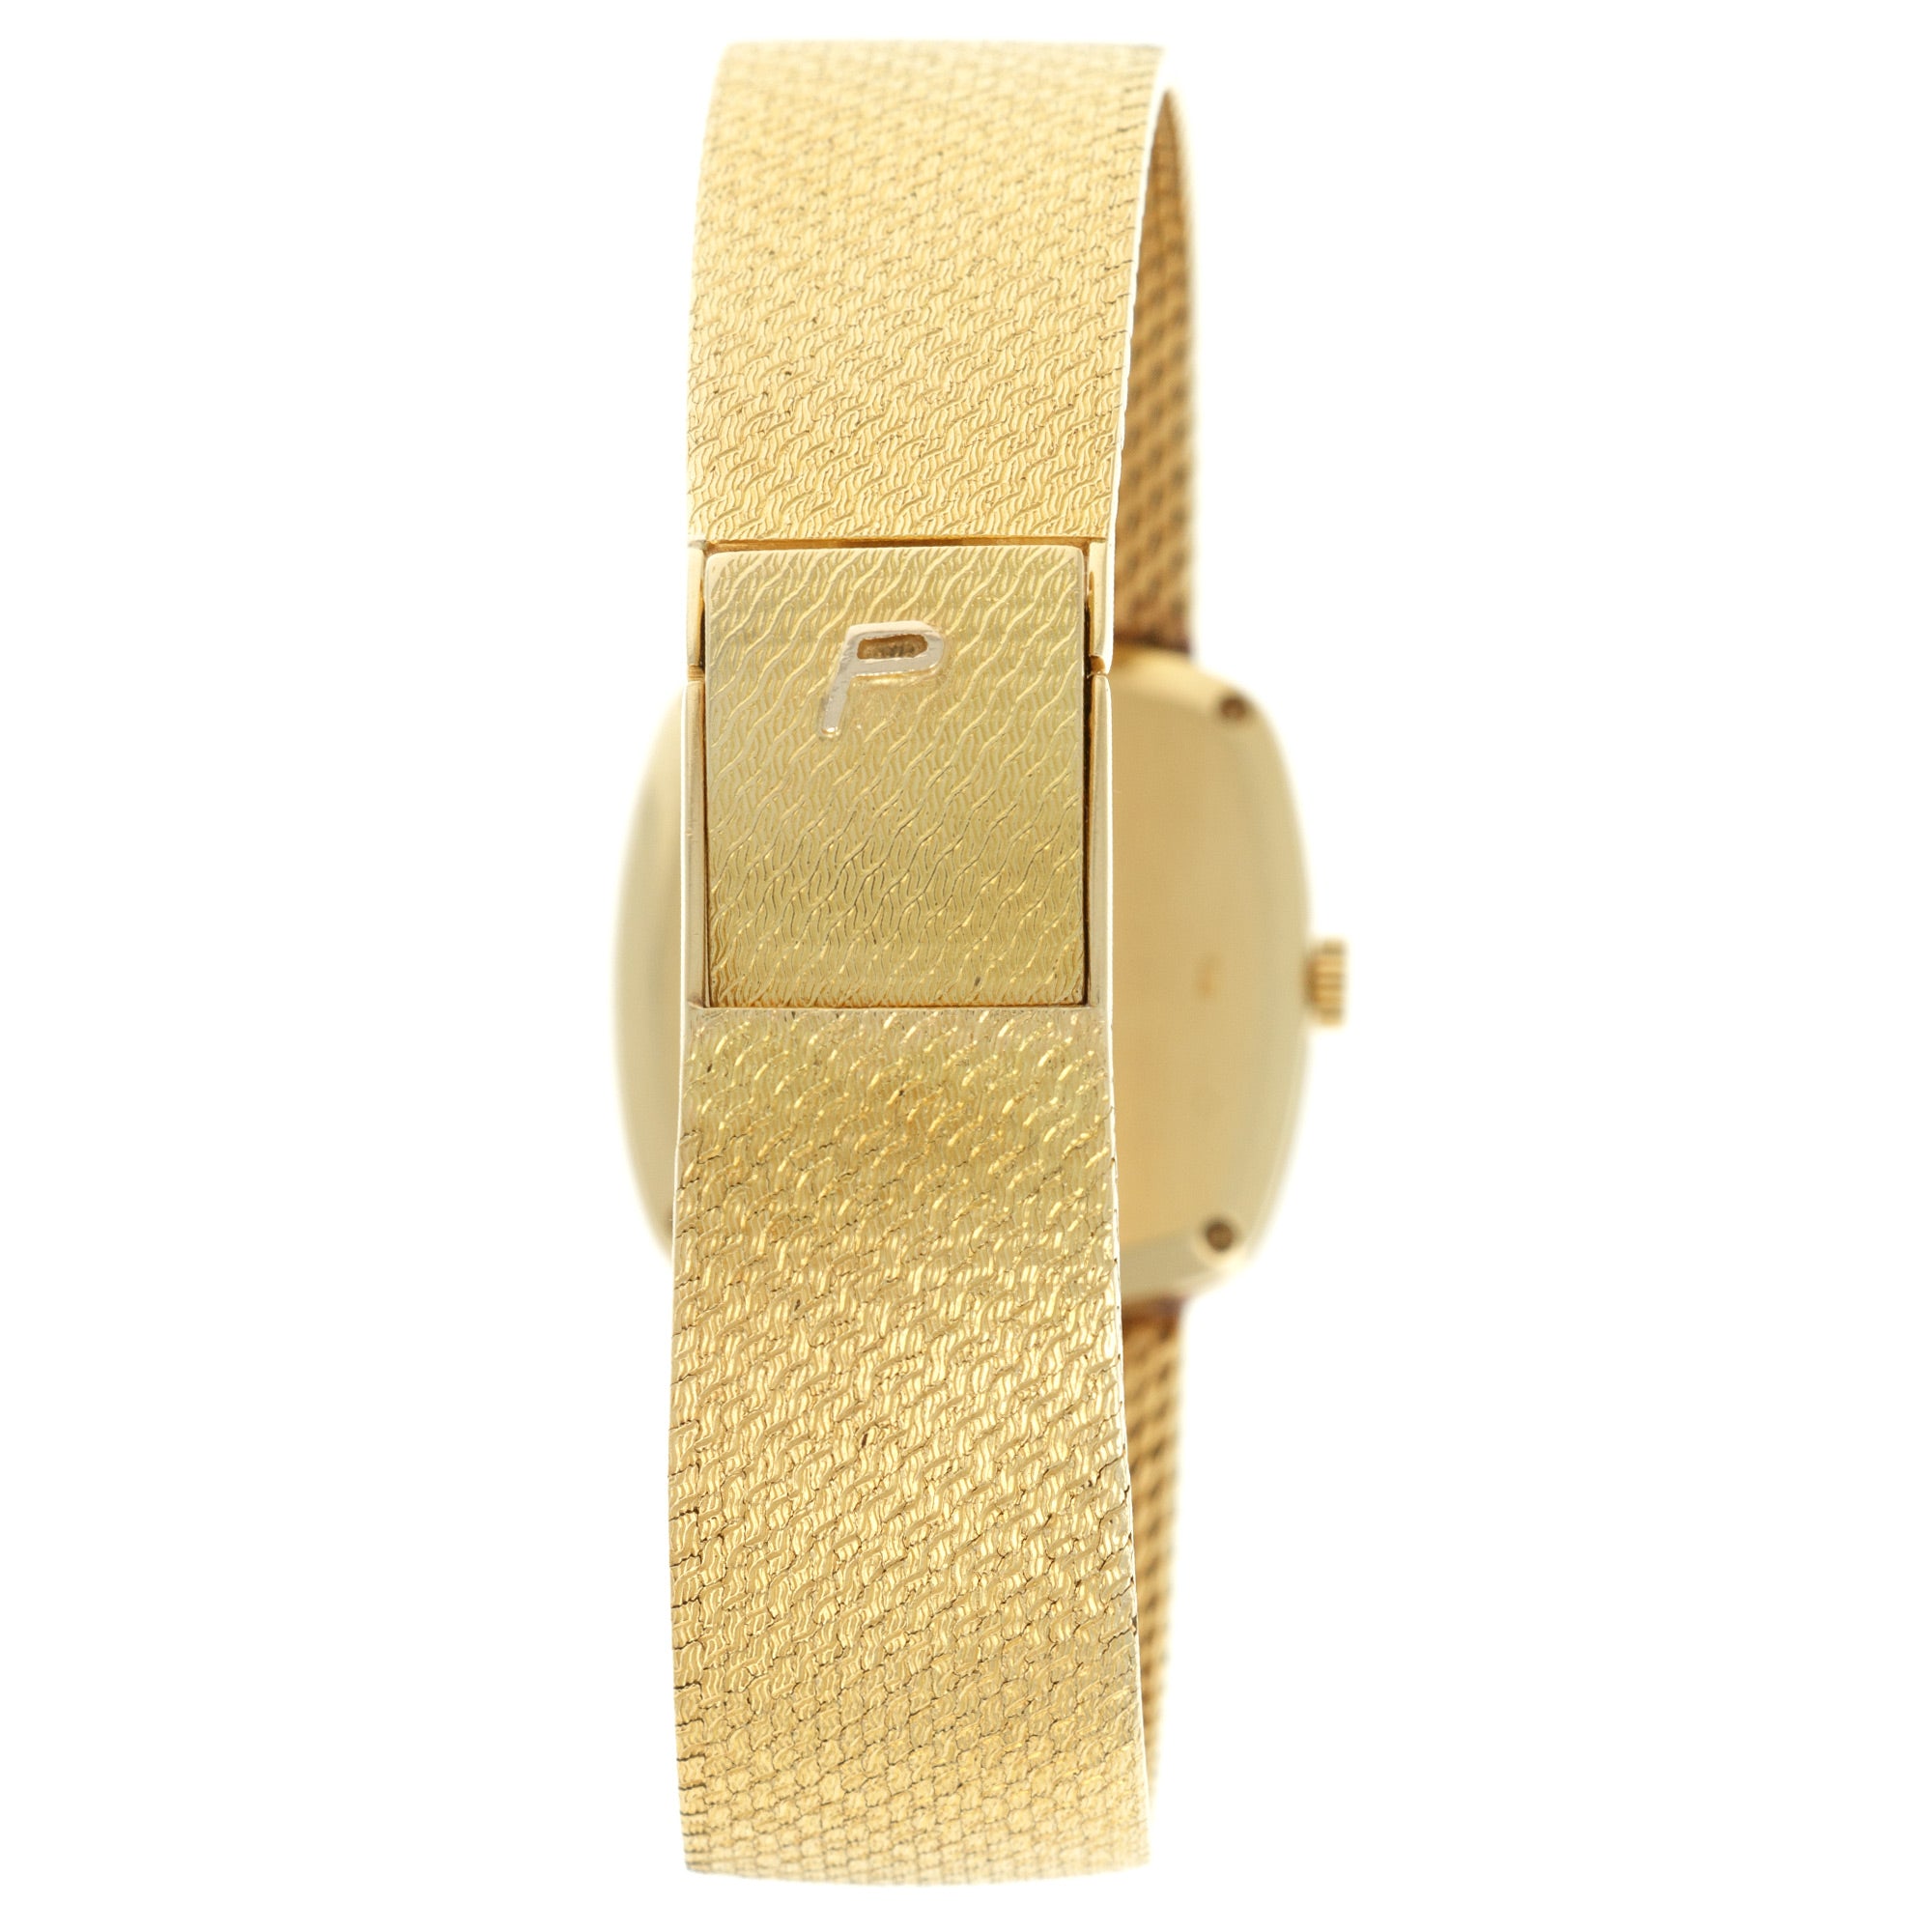 Piaget - Piaget Yellow Gold Diamond Watch, 1970s - The Keystone Watches